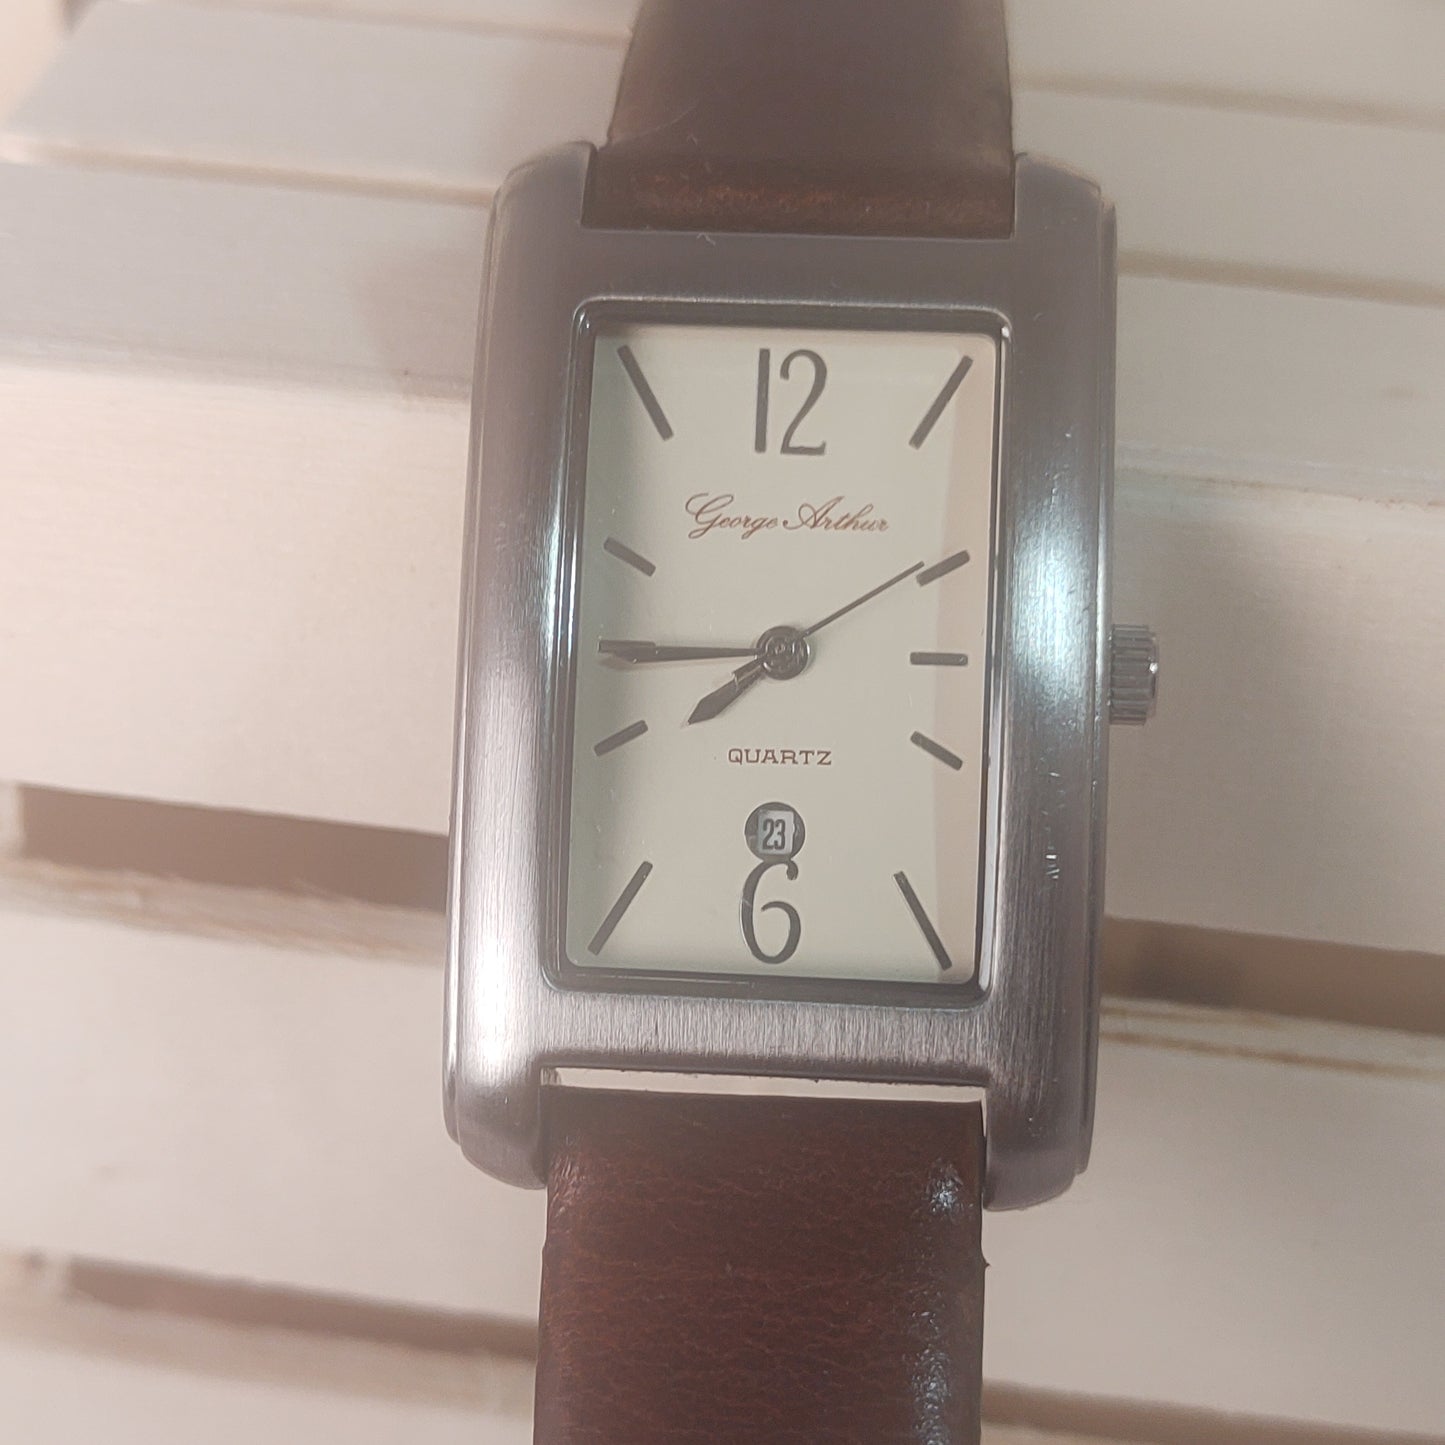 George Arthur quartz watch